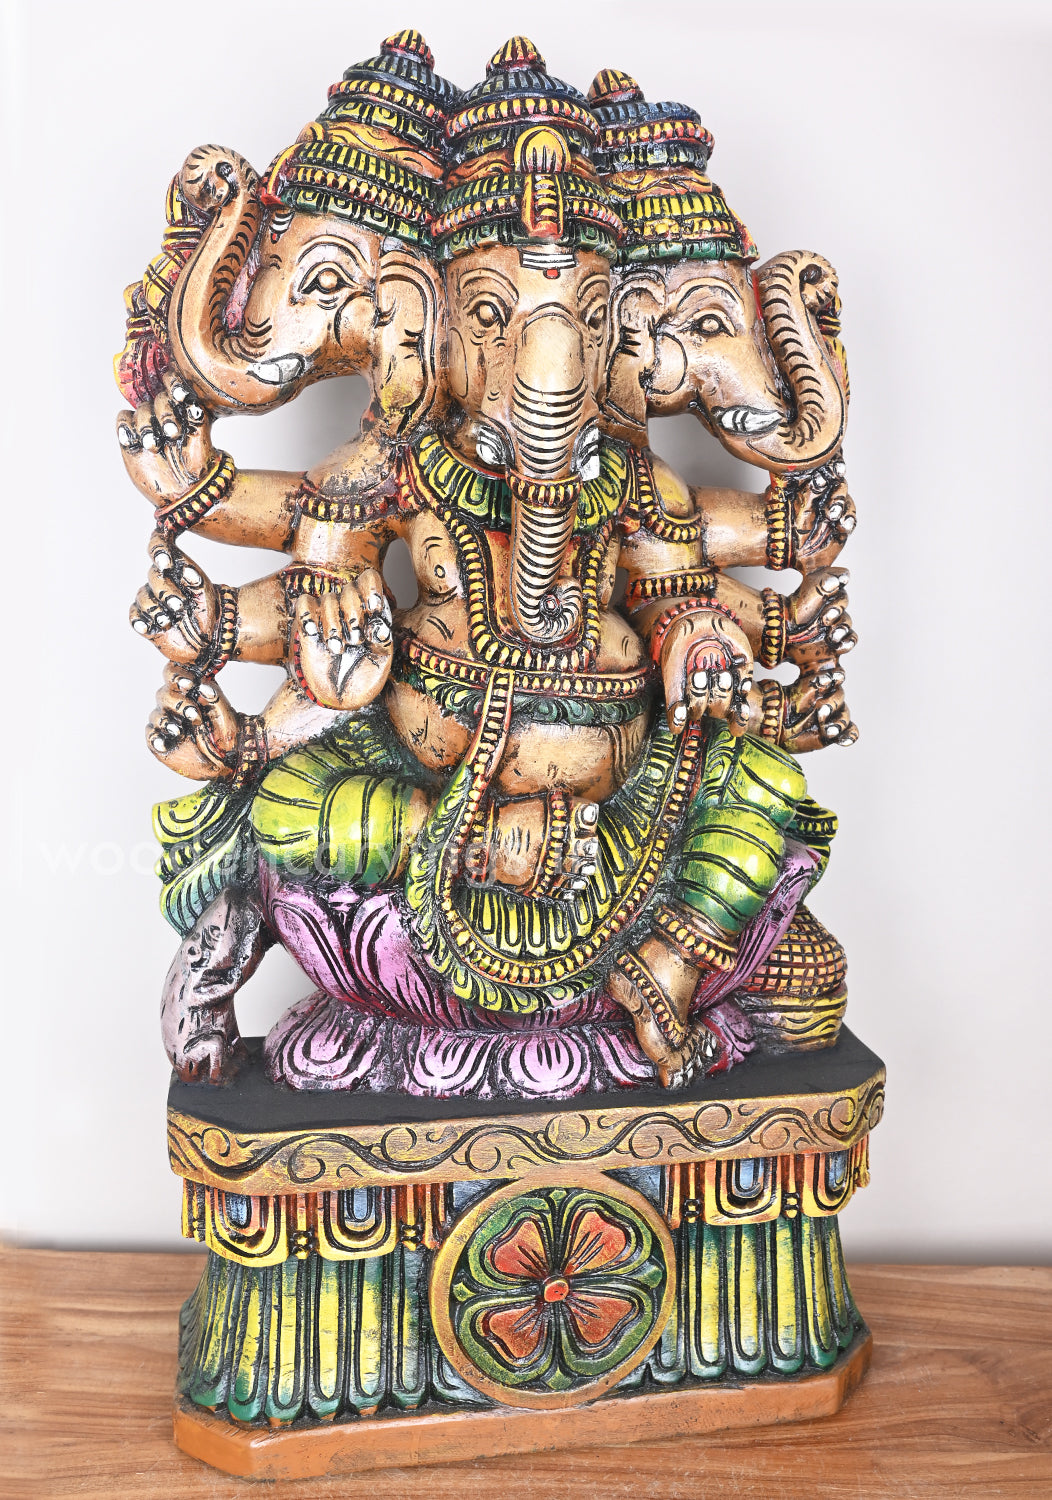 Showpiece of Eight Hand Three Head Ganesha on Pink Lotus Wooden Sculpture 33"